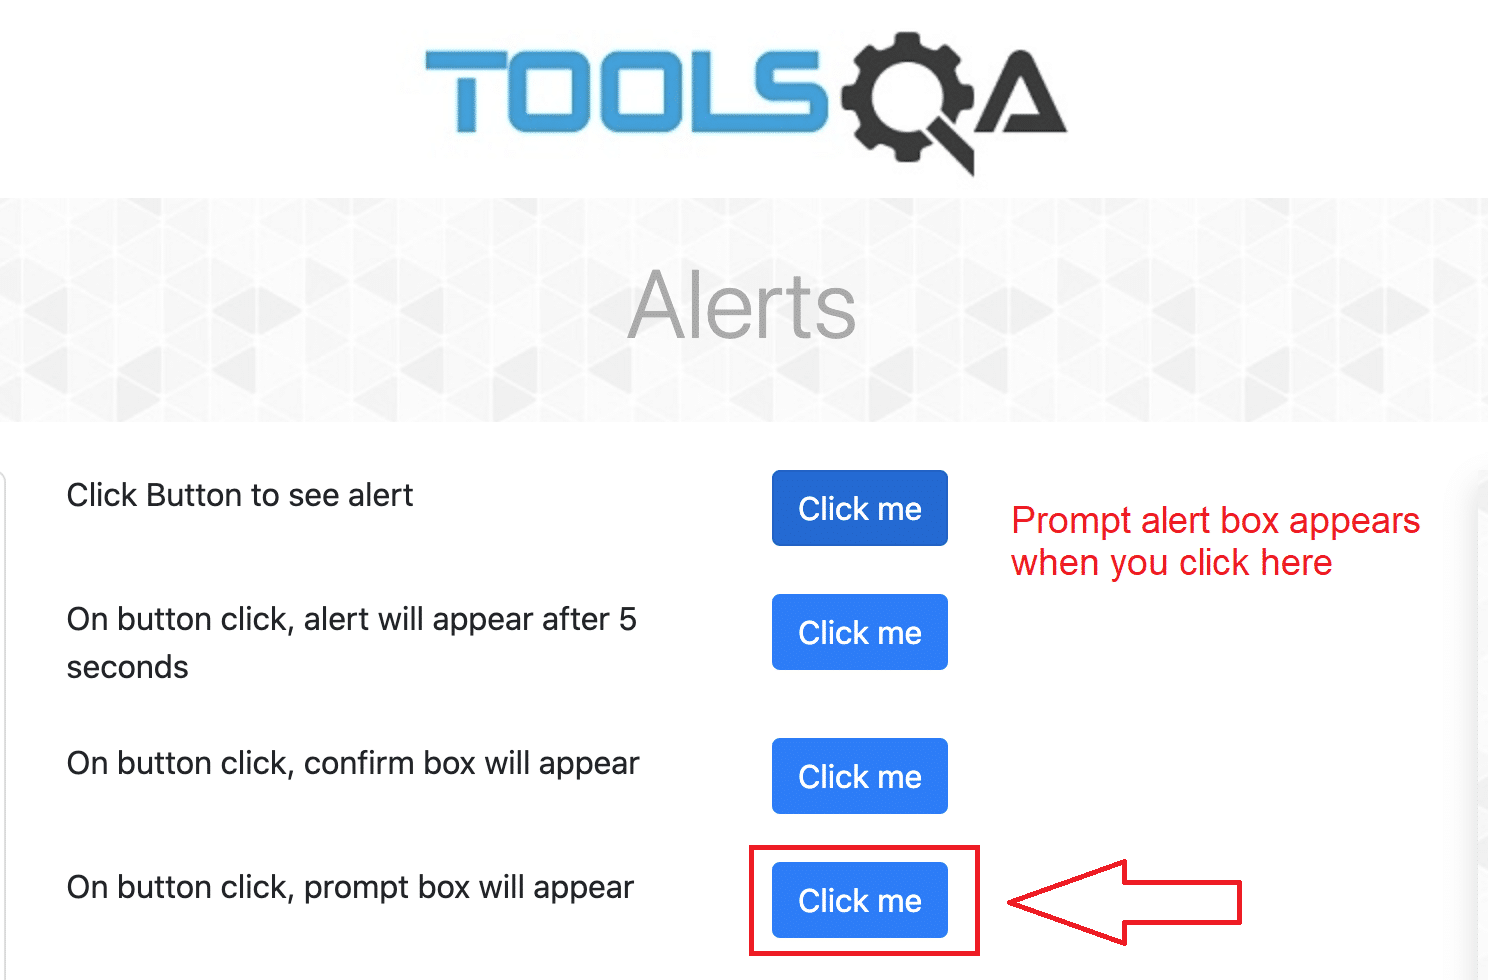 Prompt alert box